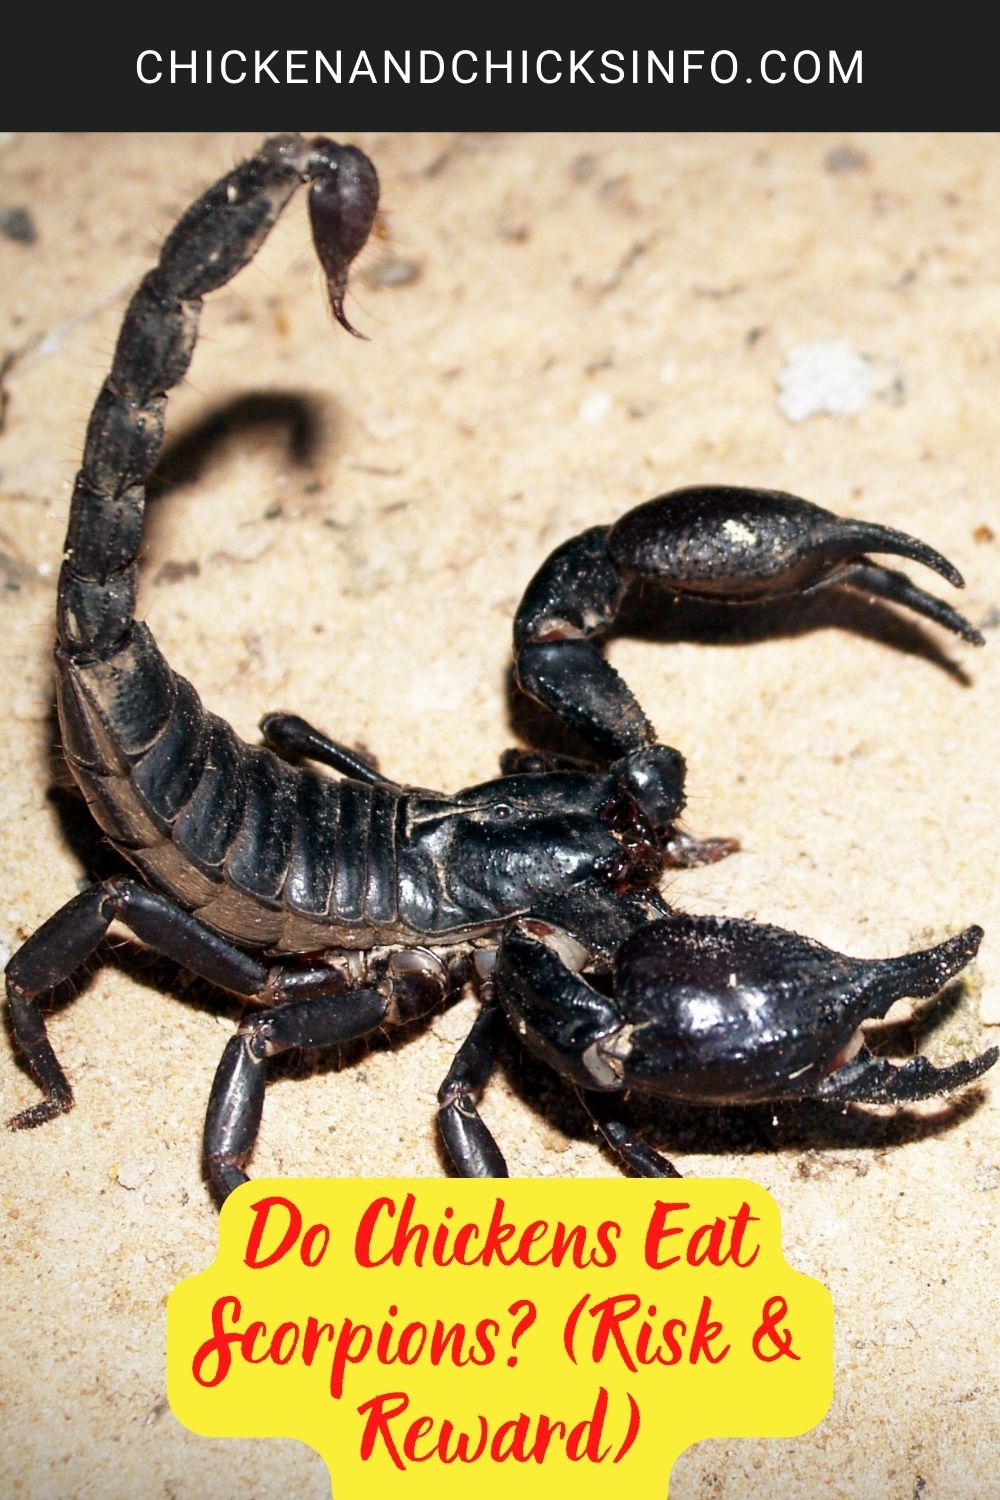 Do Chickens Eat Scorpions? (Risk & Reward) poster.
